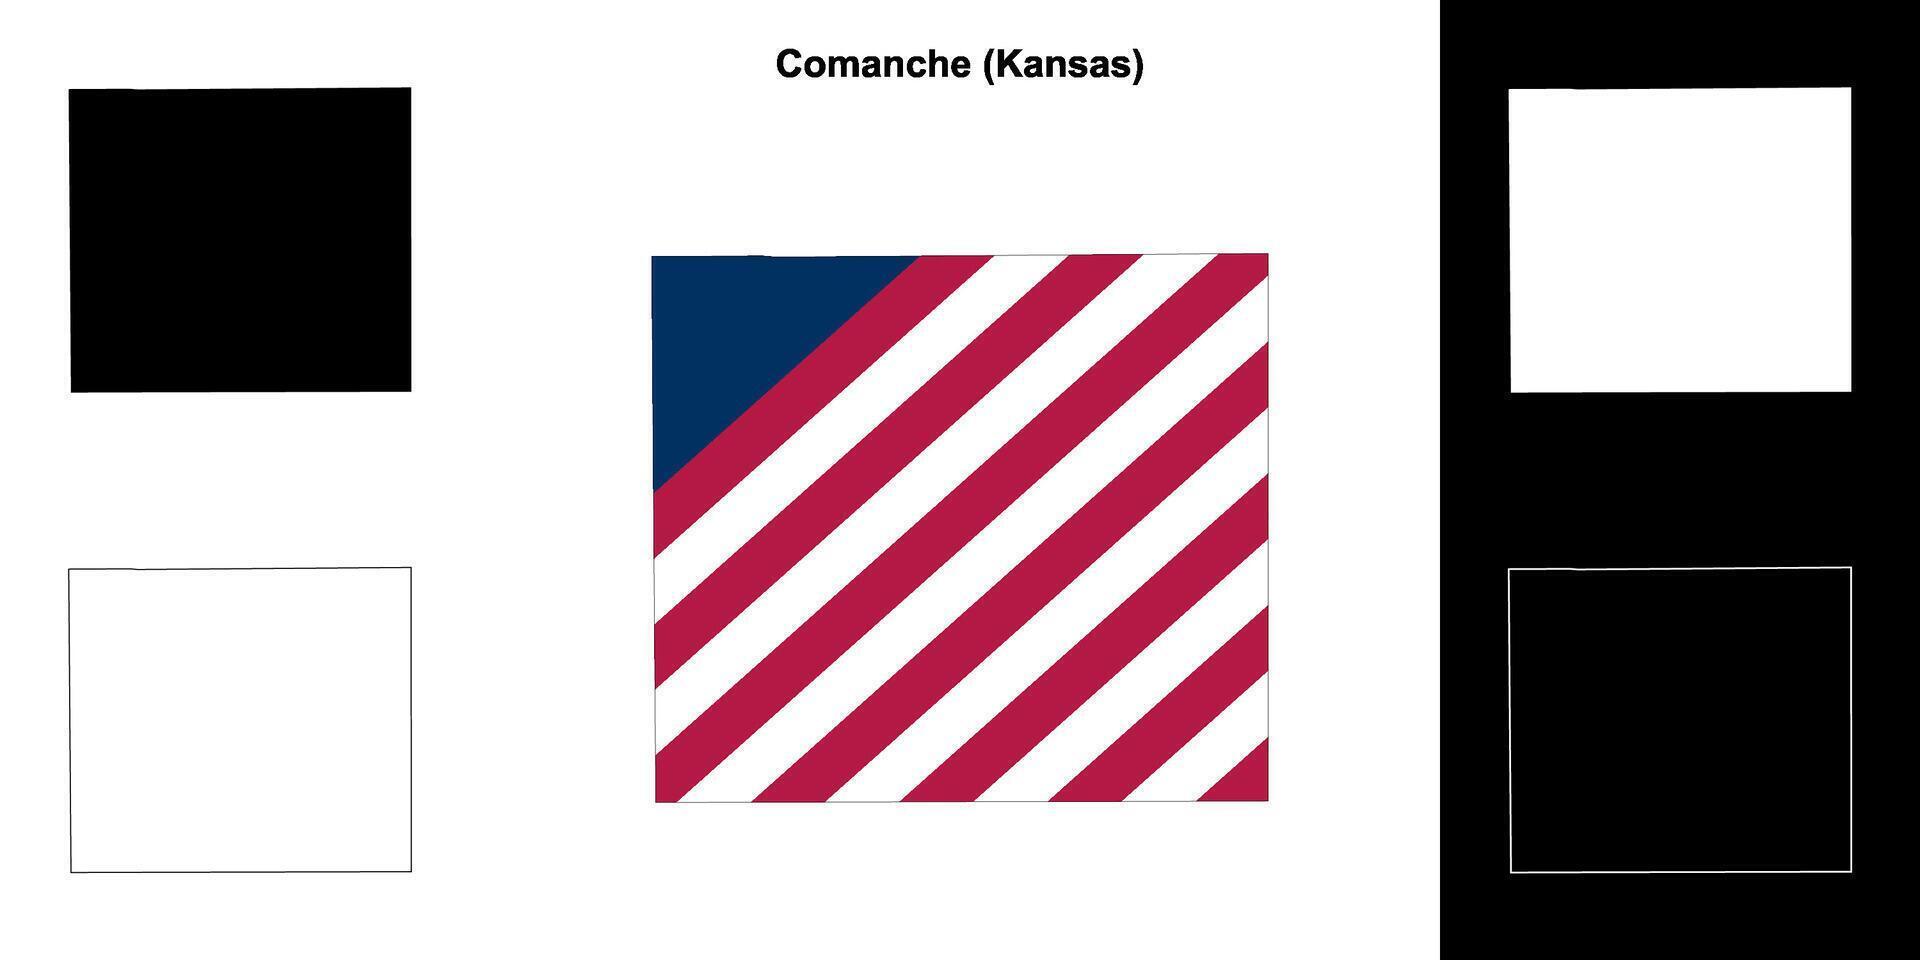 comanche condado, Kansas esboço mapa conjunto vetor